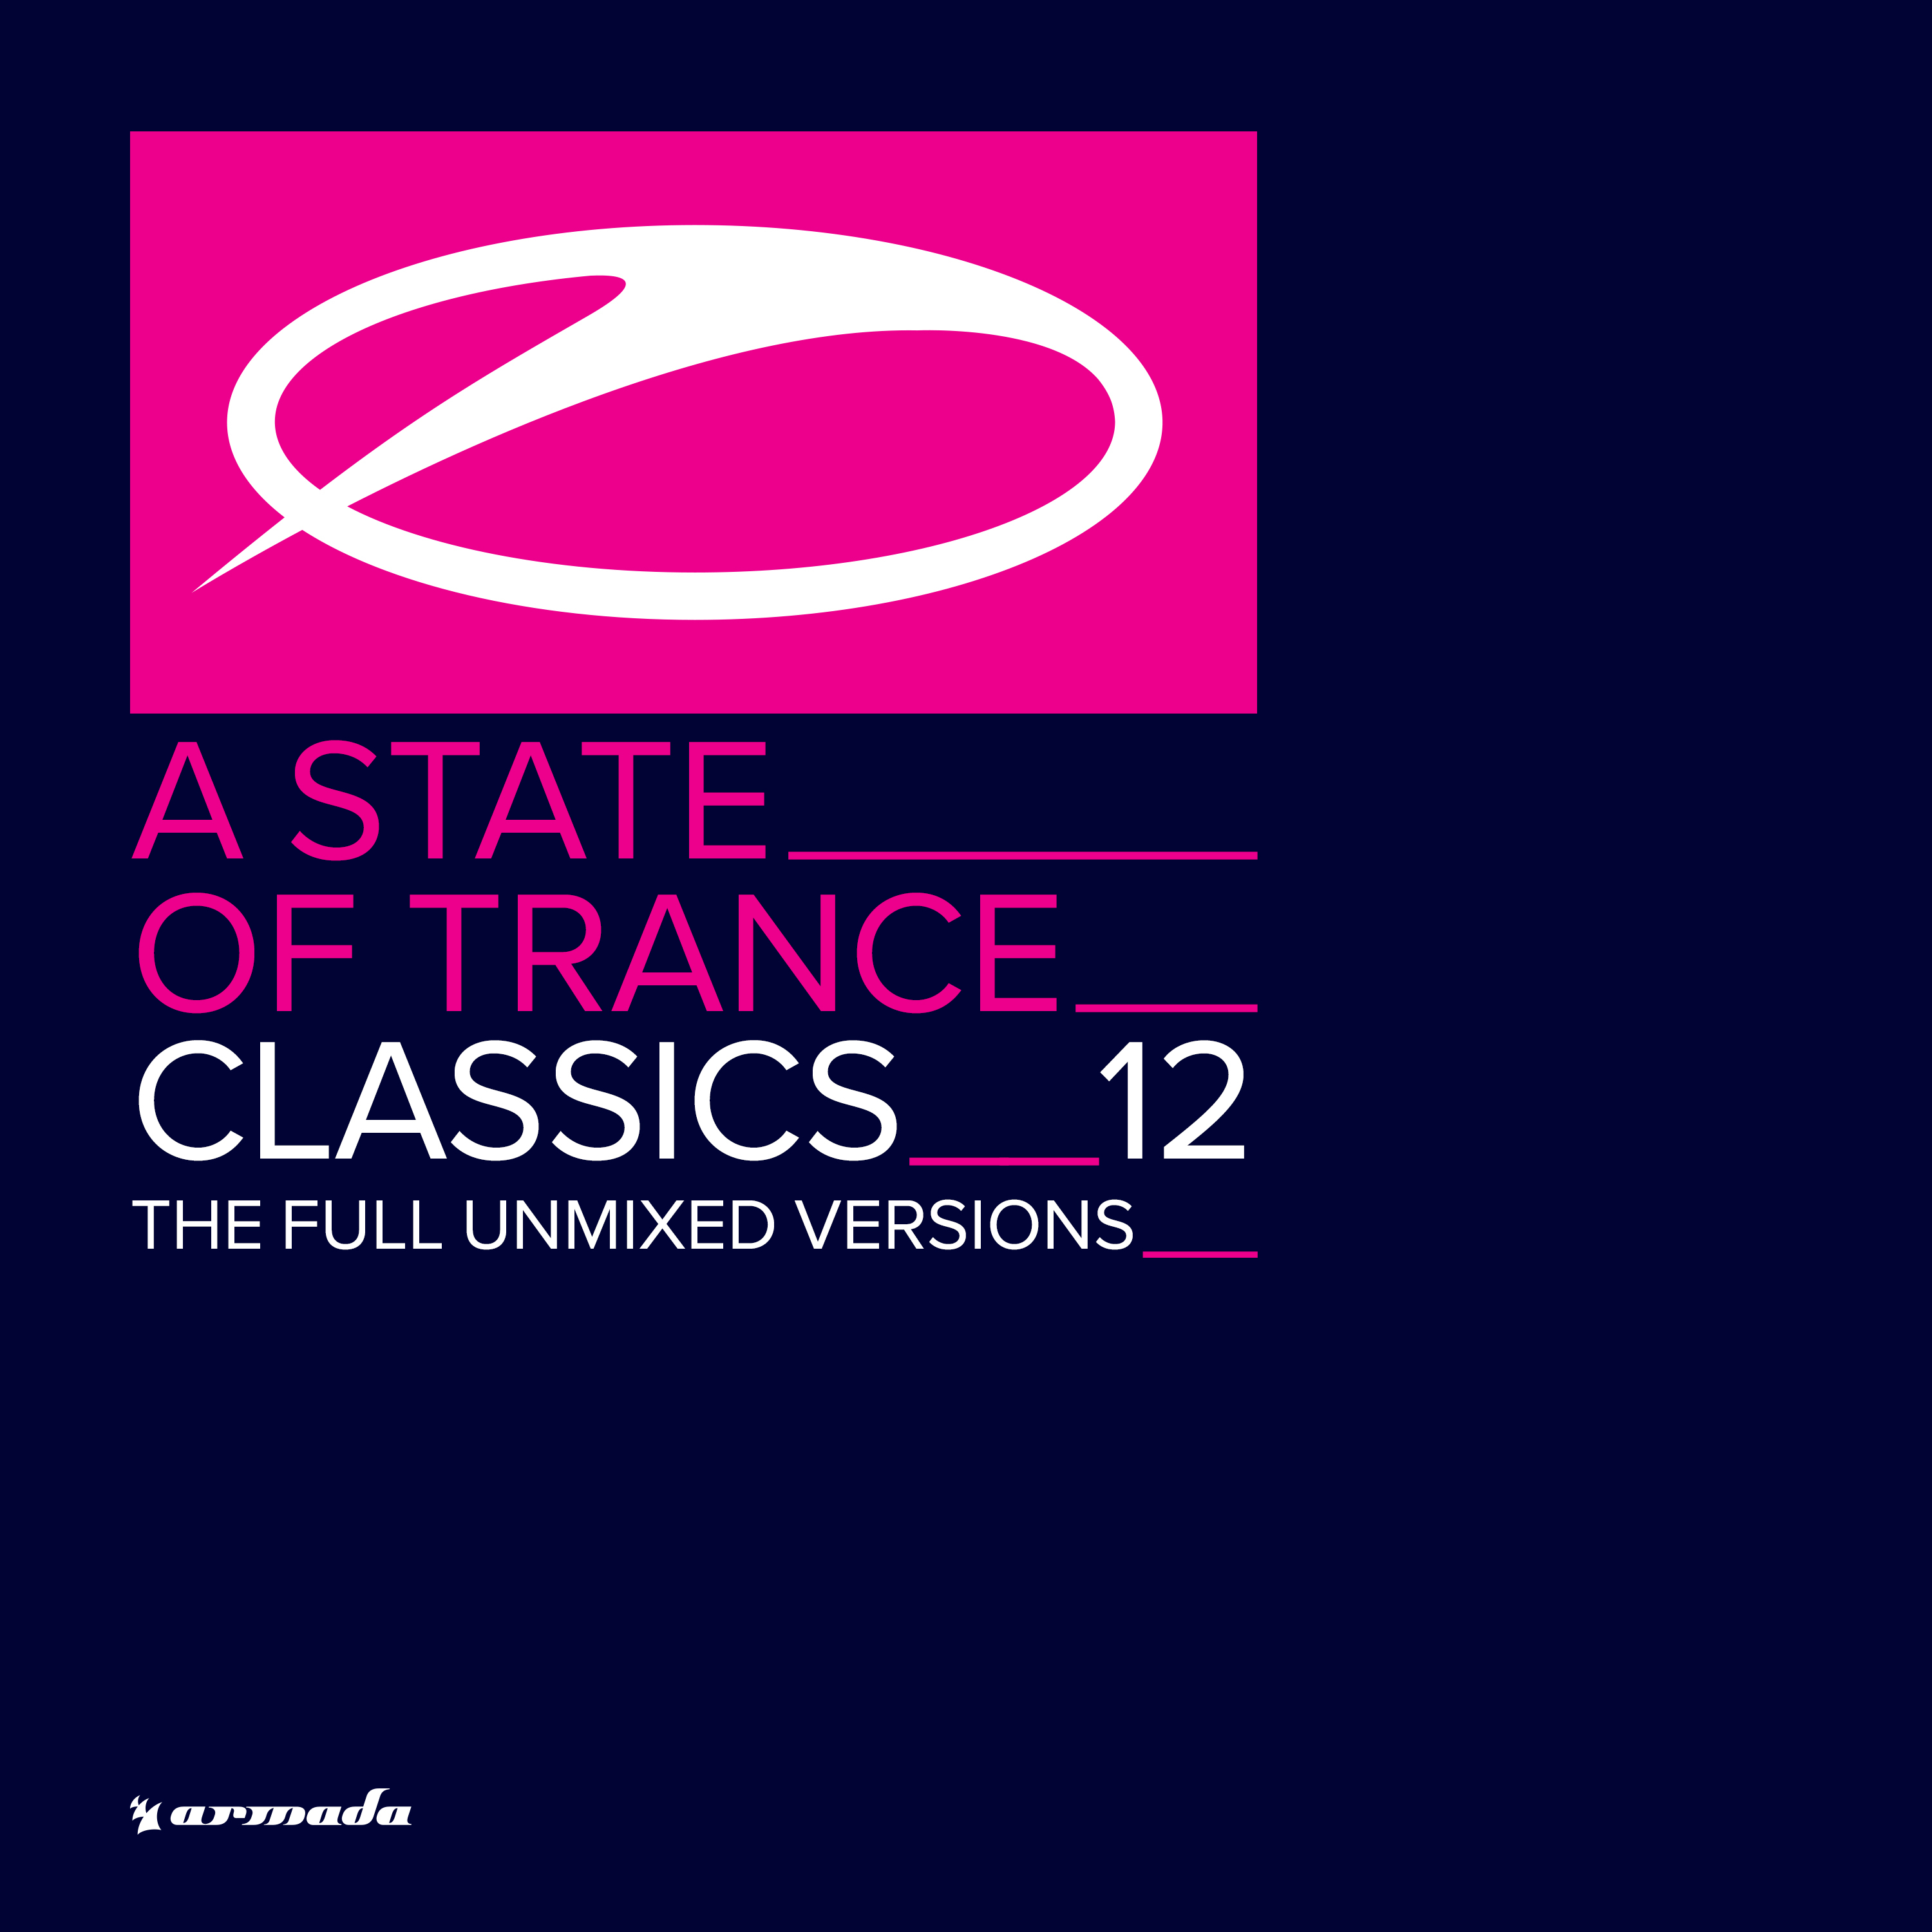 A State Of Trance Classics, Vol. 12